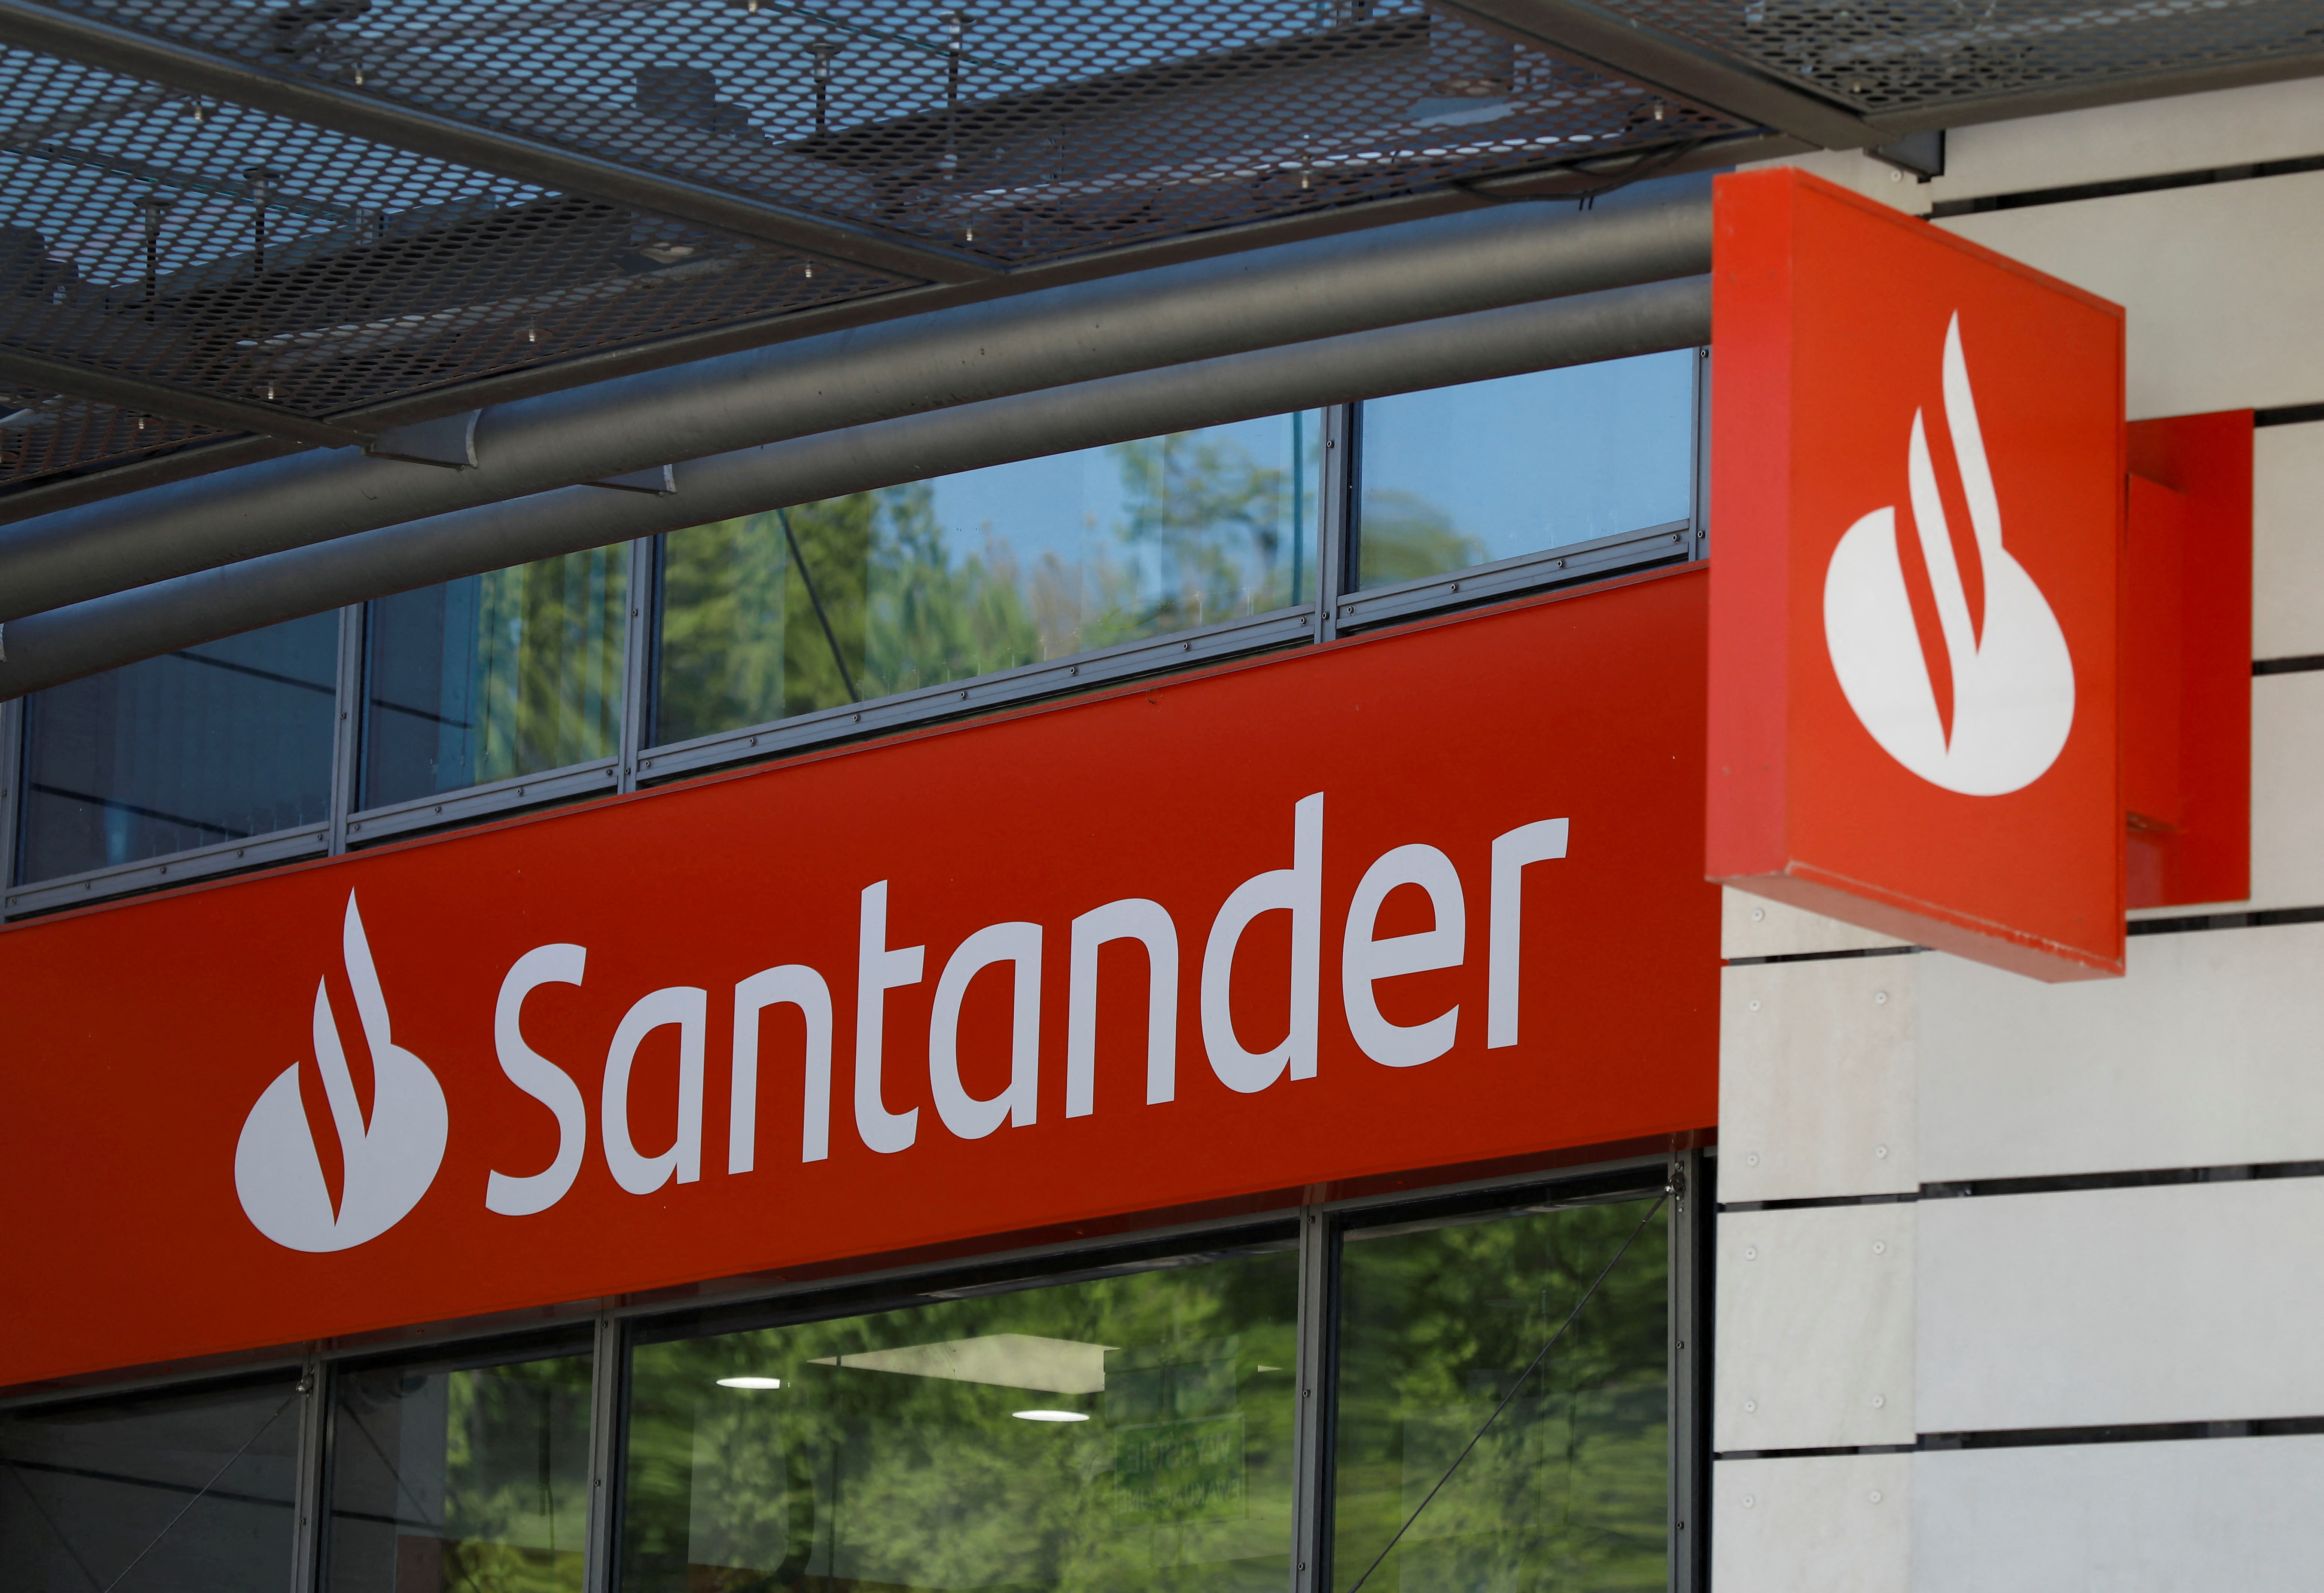 Santander in Warsaw